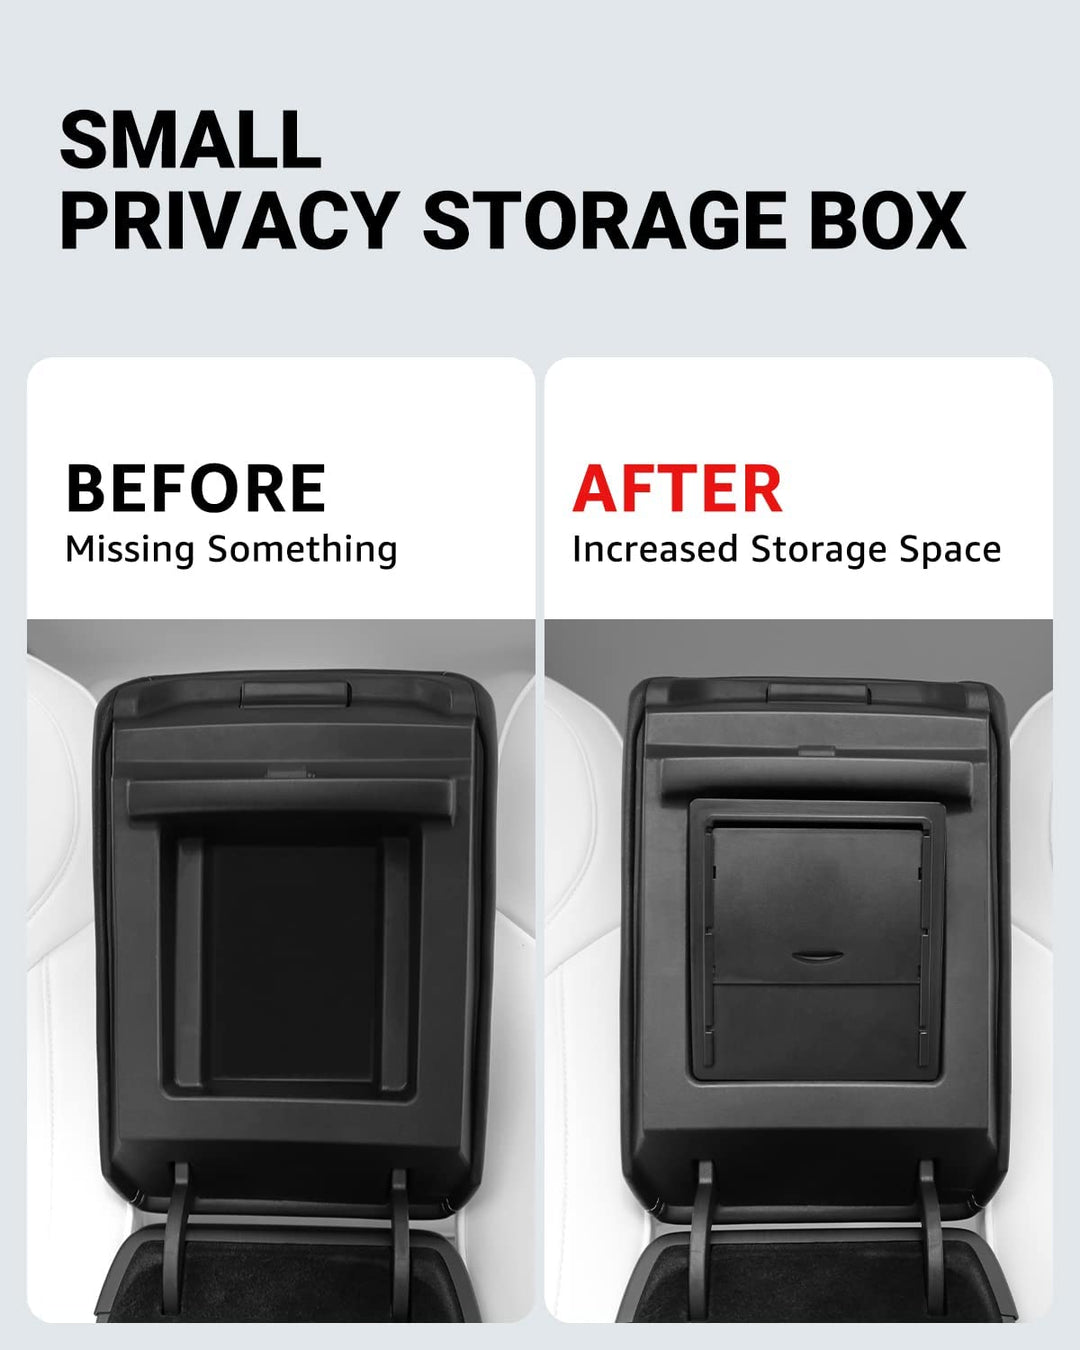 Cloudmall Tesla Model 3/Y Center Console Organizer Armrest Hidden Storage Box